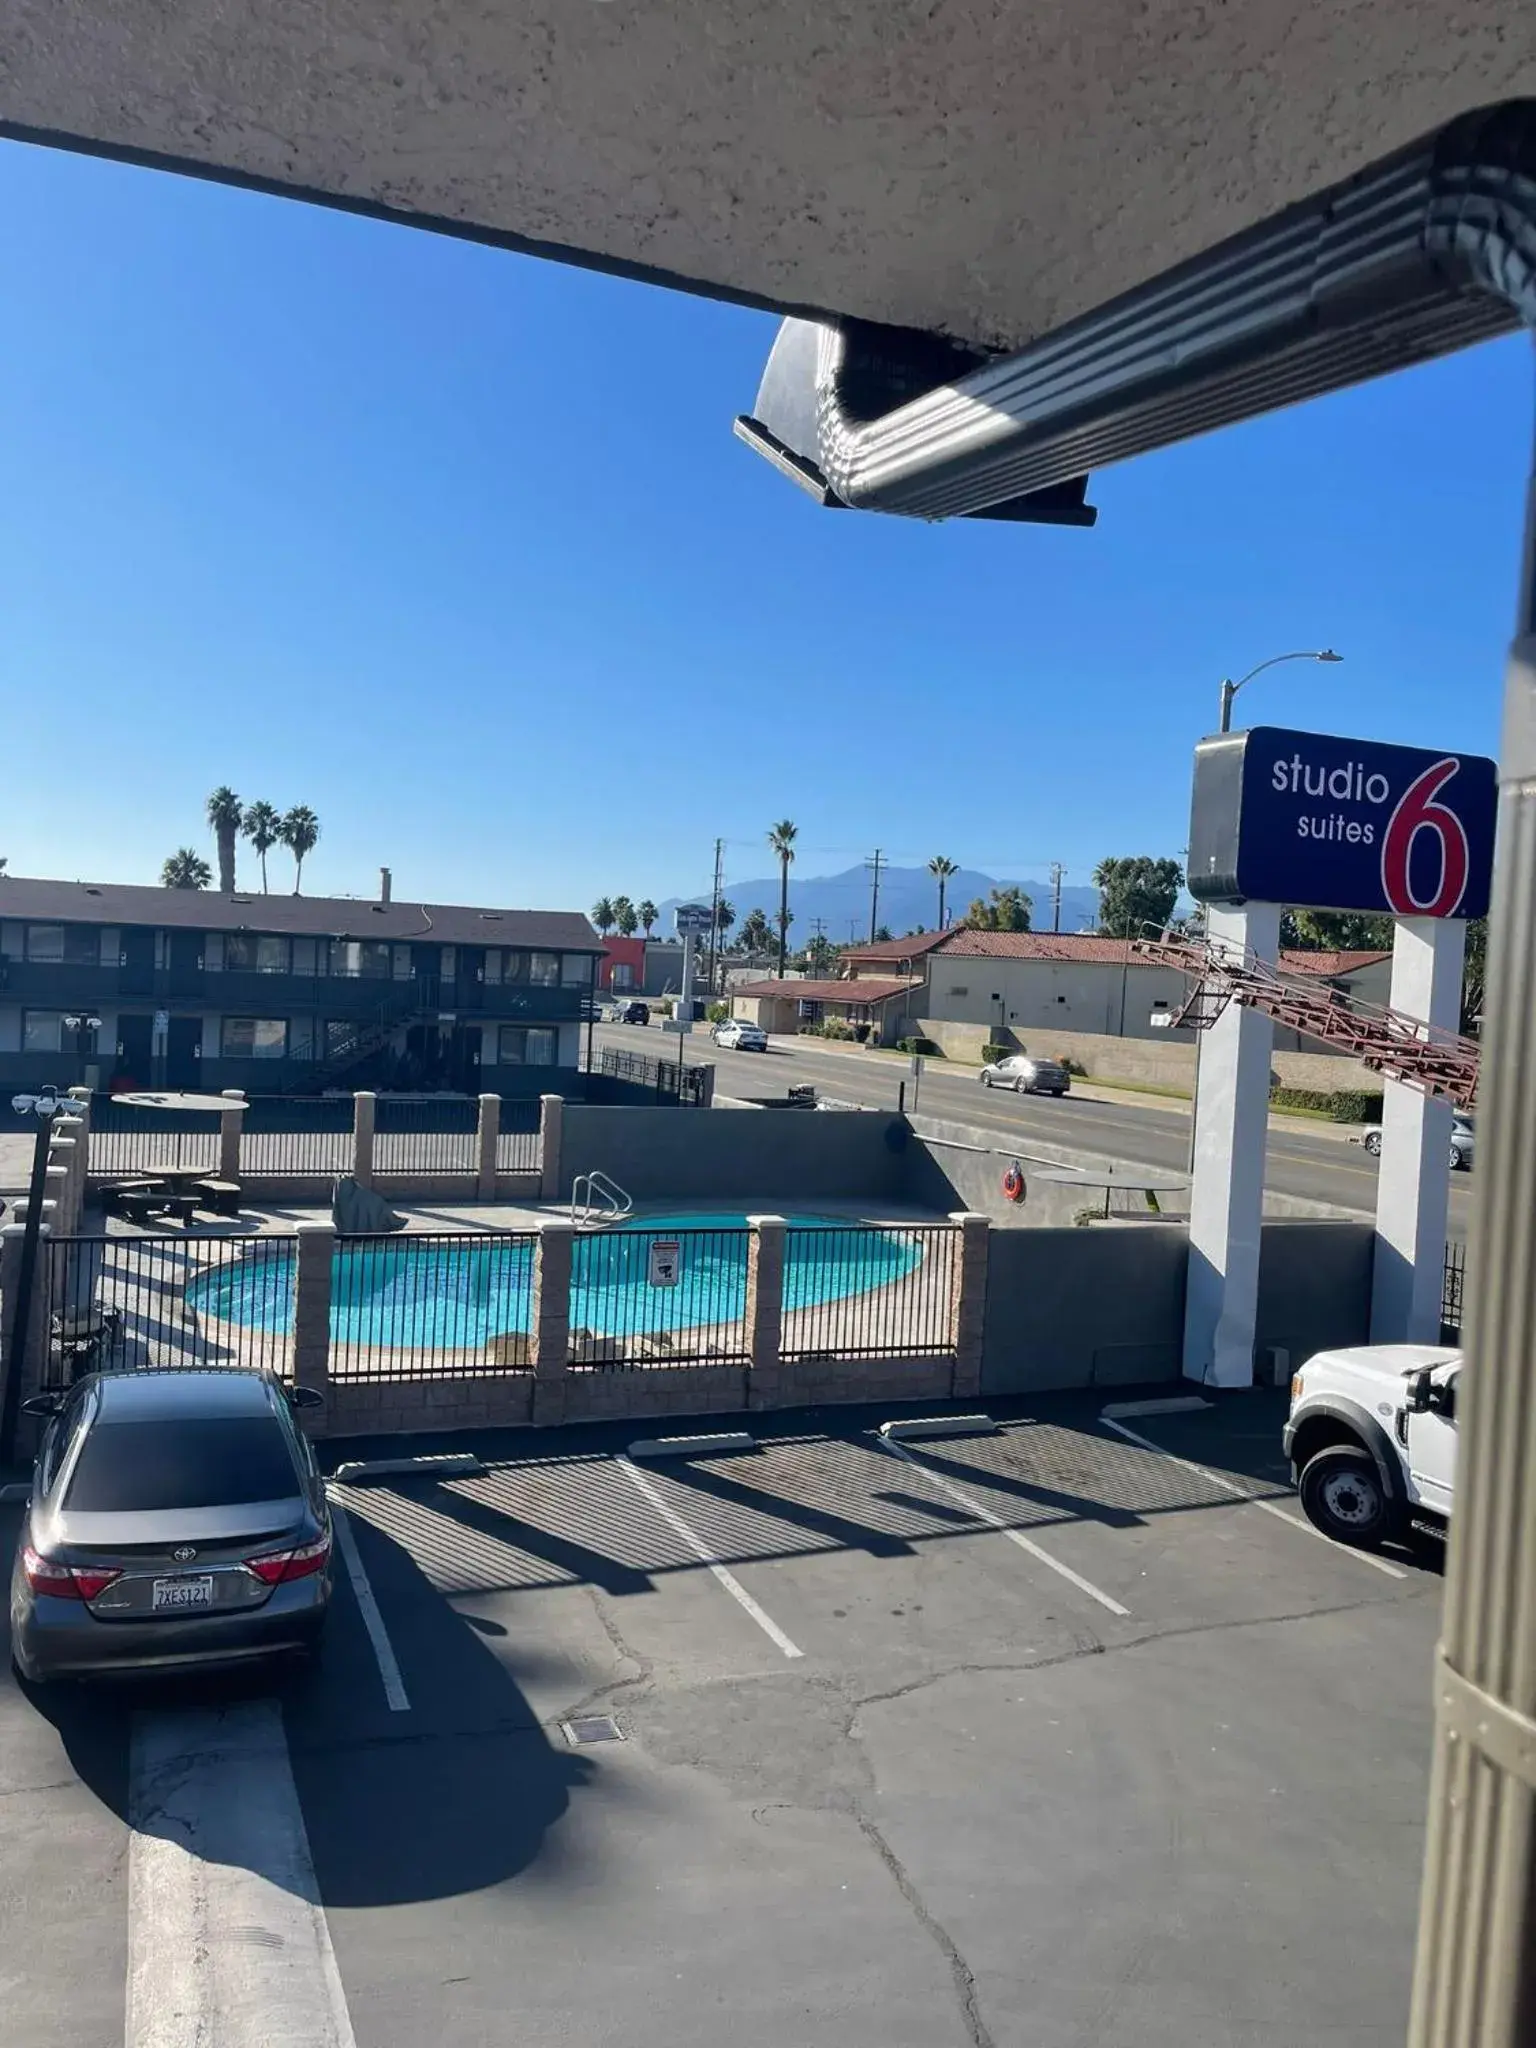 Pool View in Studio 6 Suites San Bernardino, CA